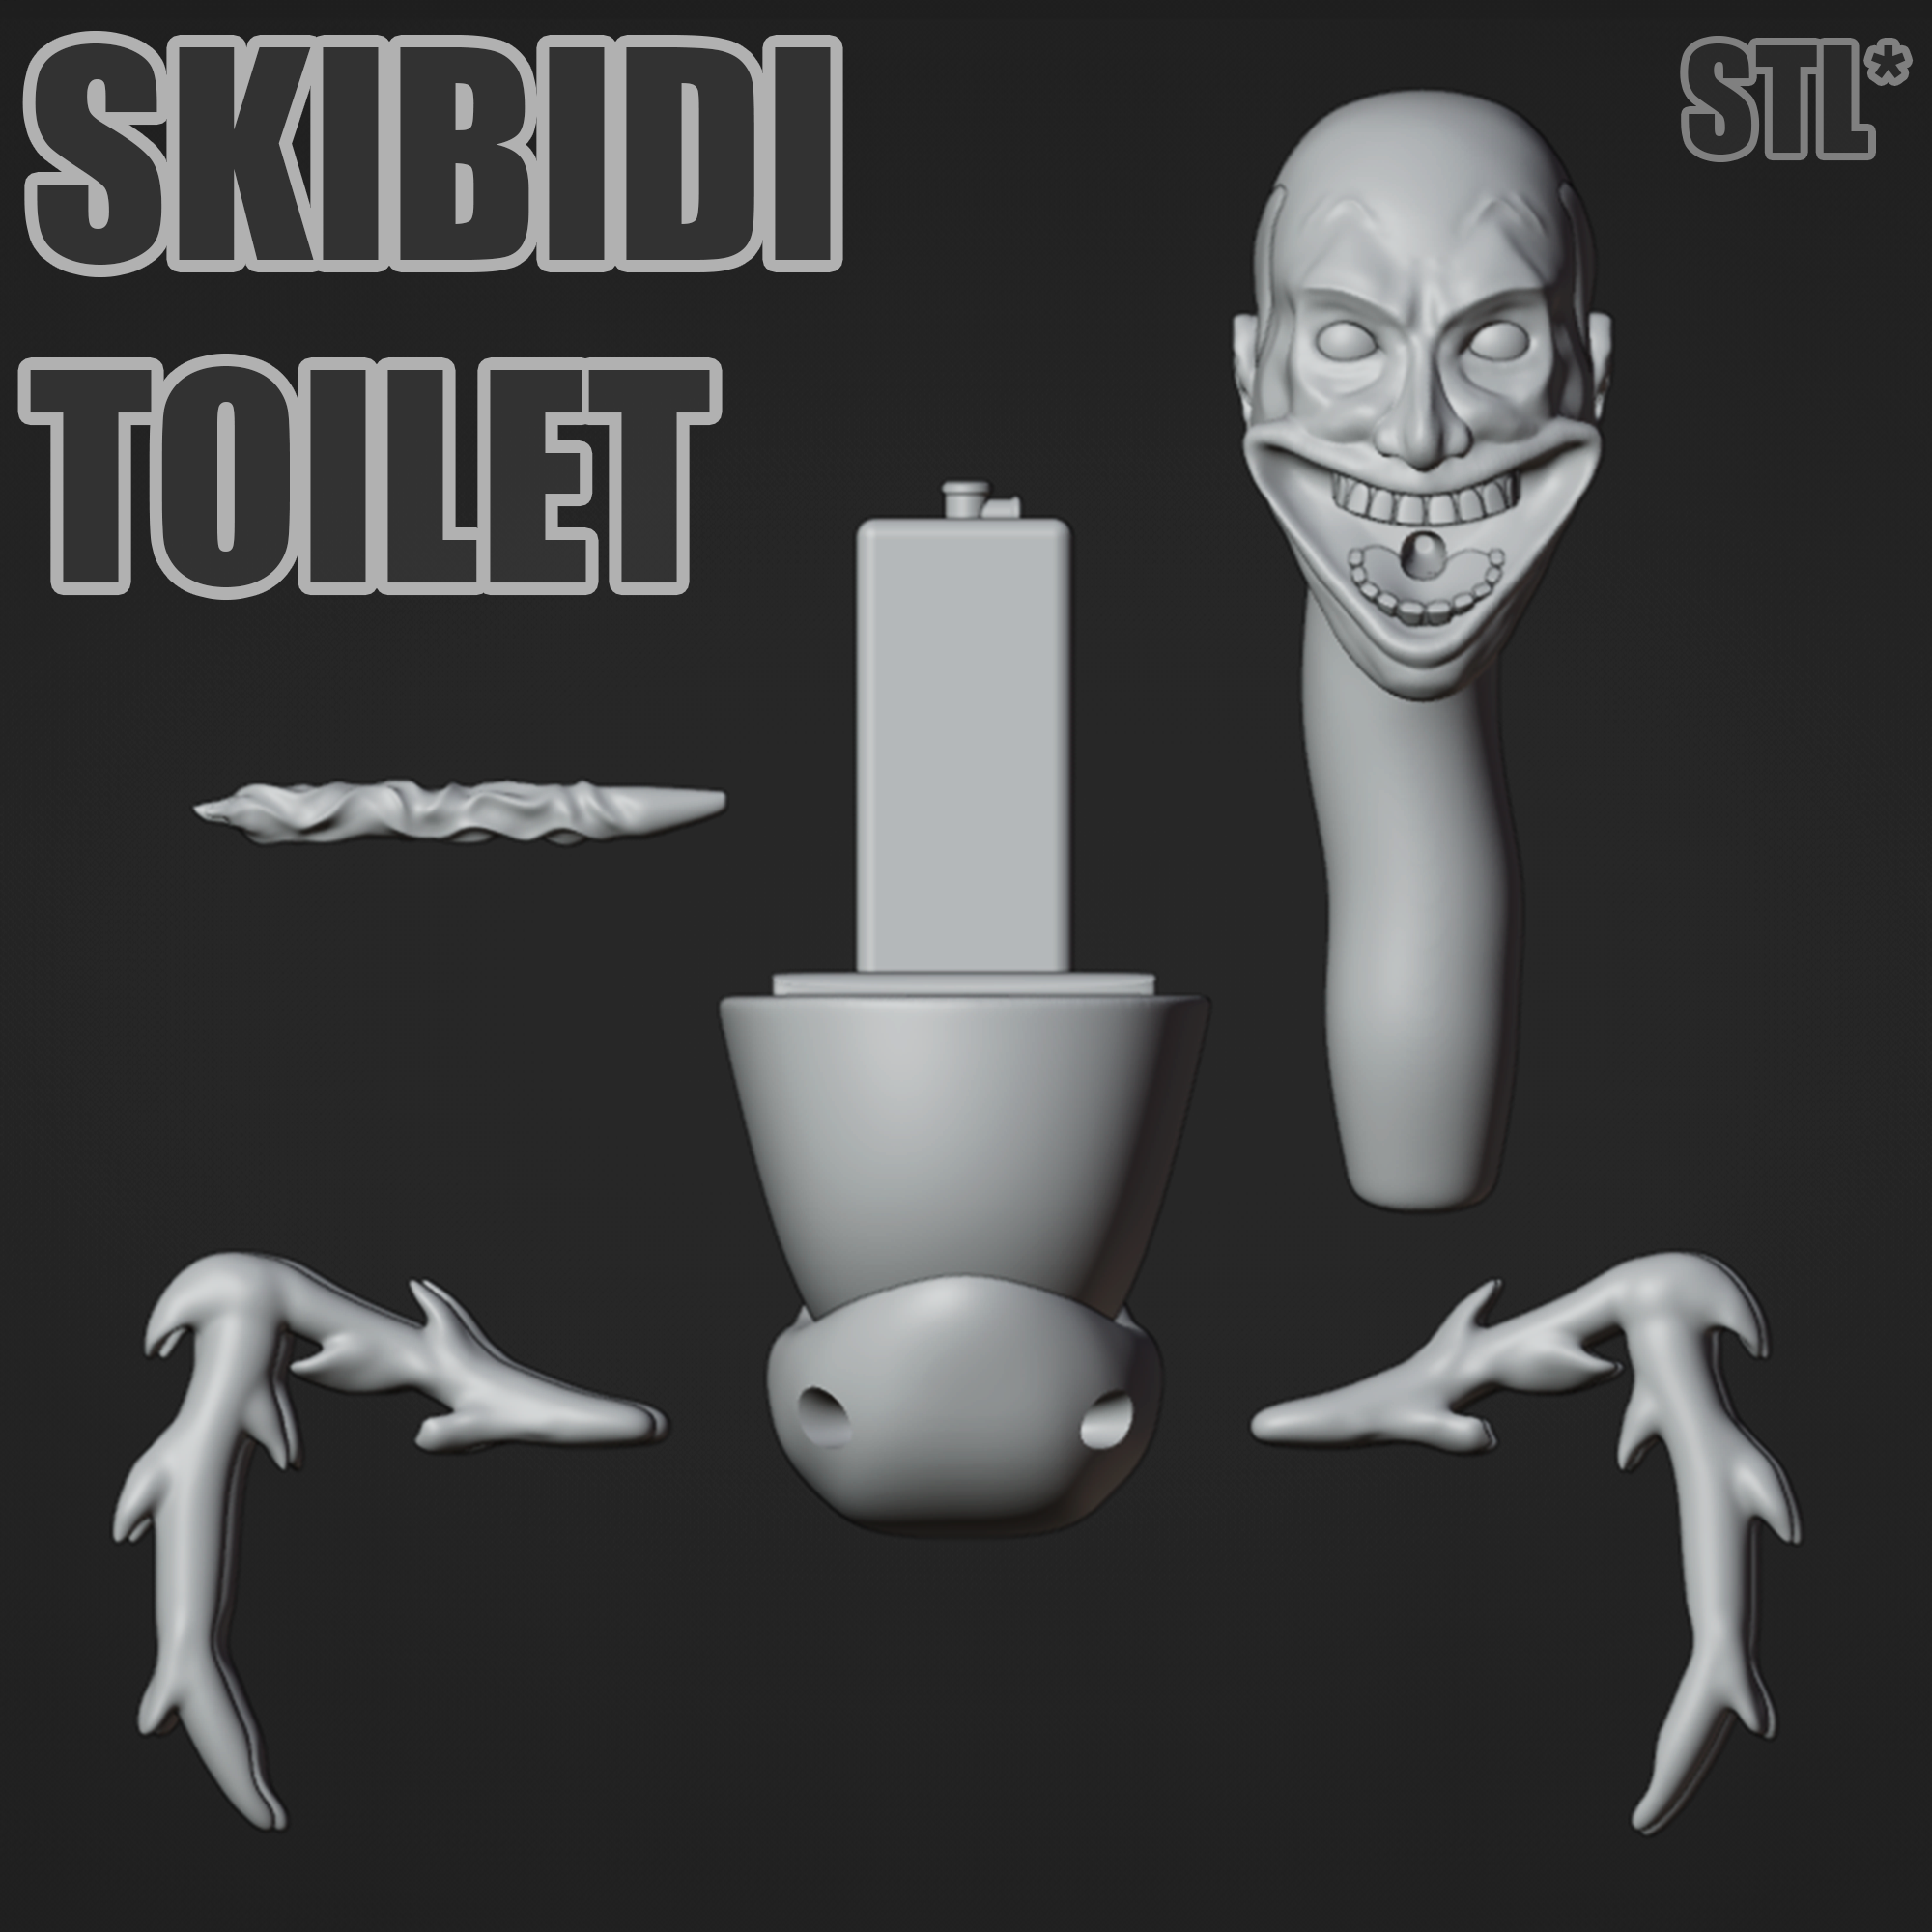 Skibidi Toilet Fans Club